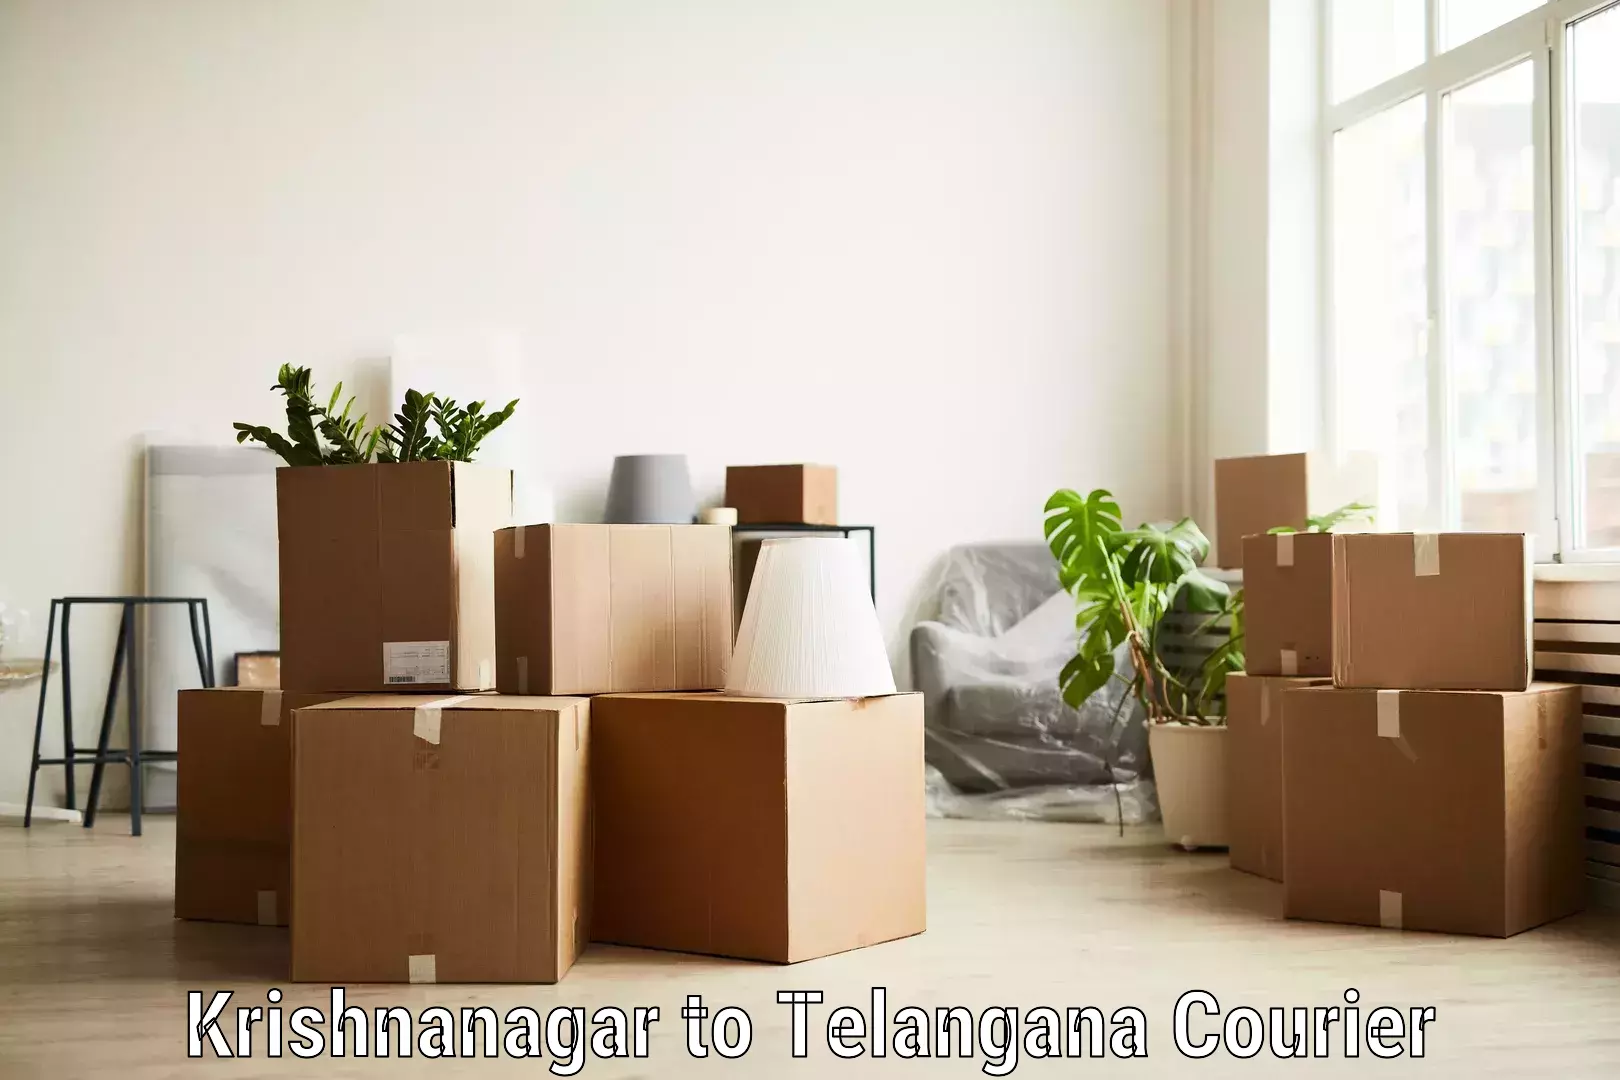 Sustainable delivery practices Krishnanagar to Balanagar